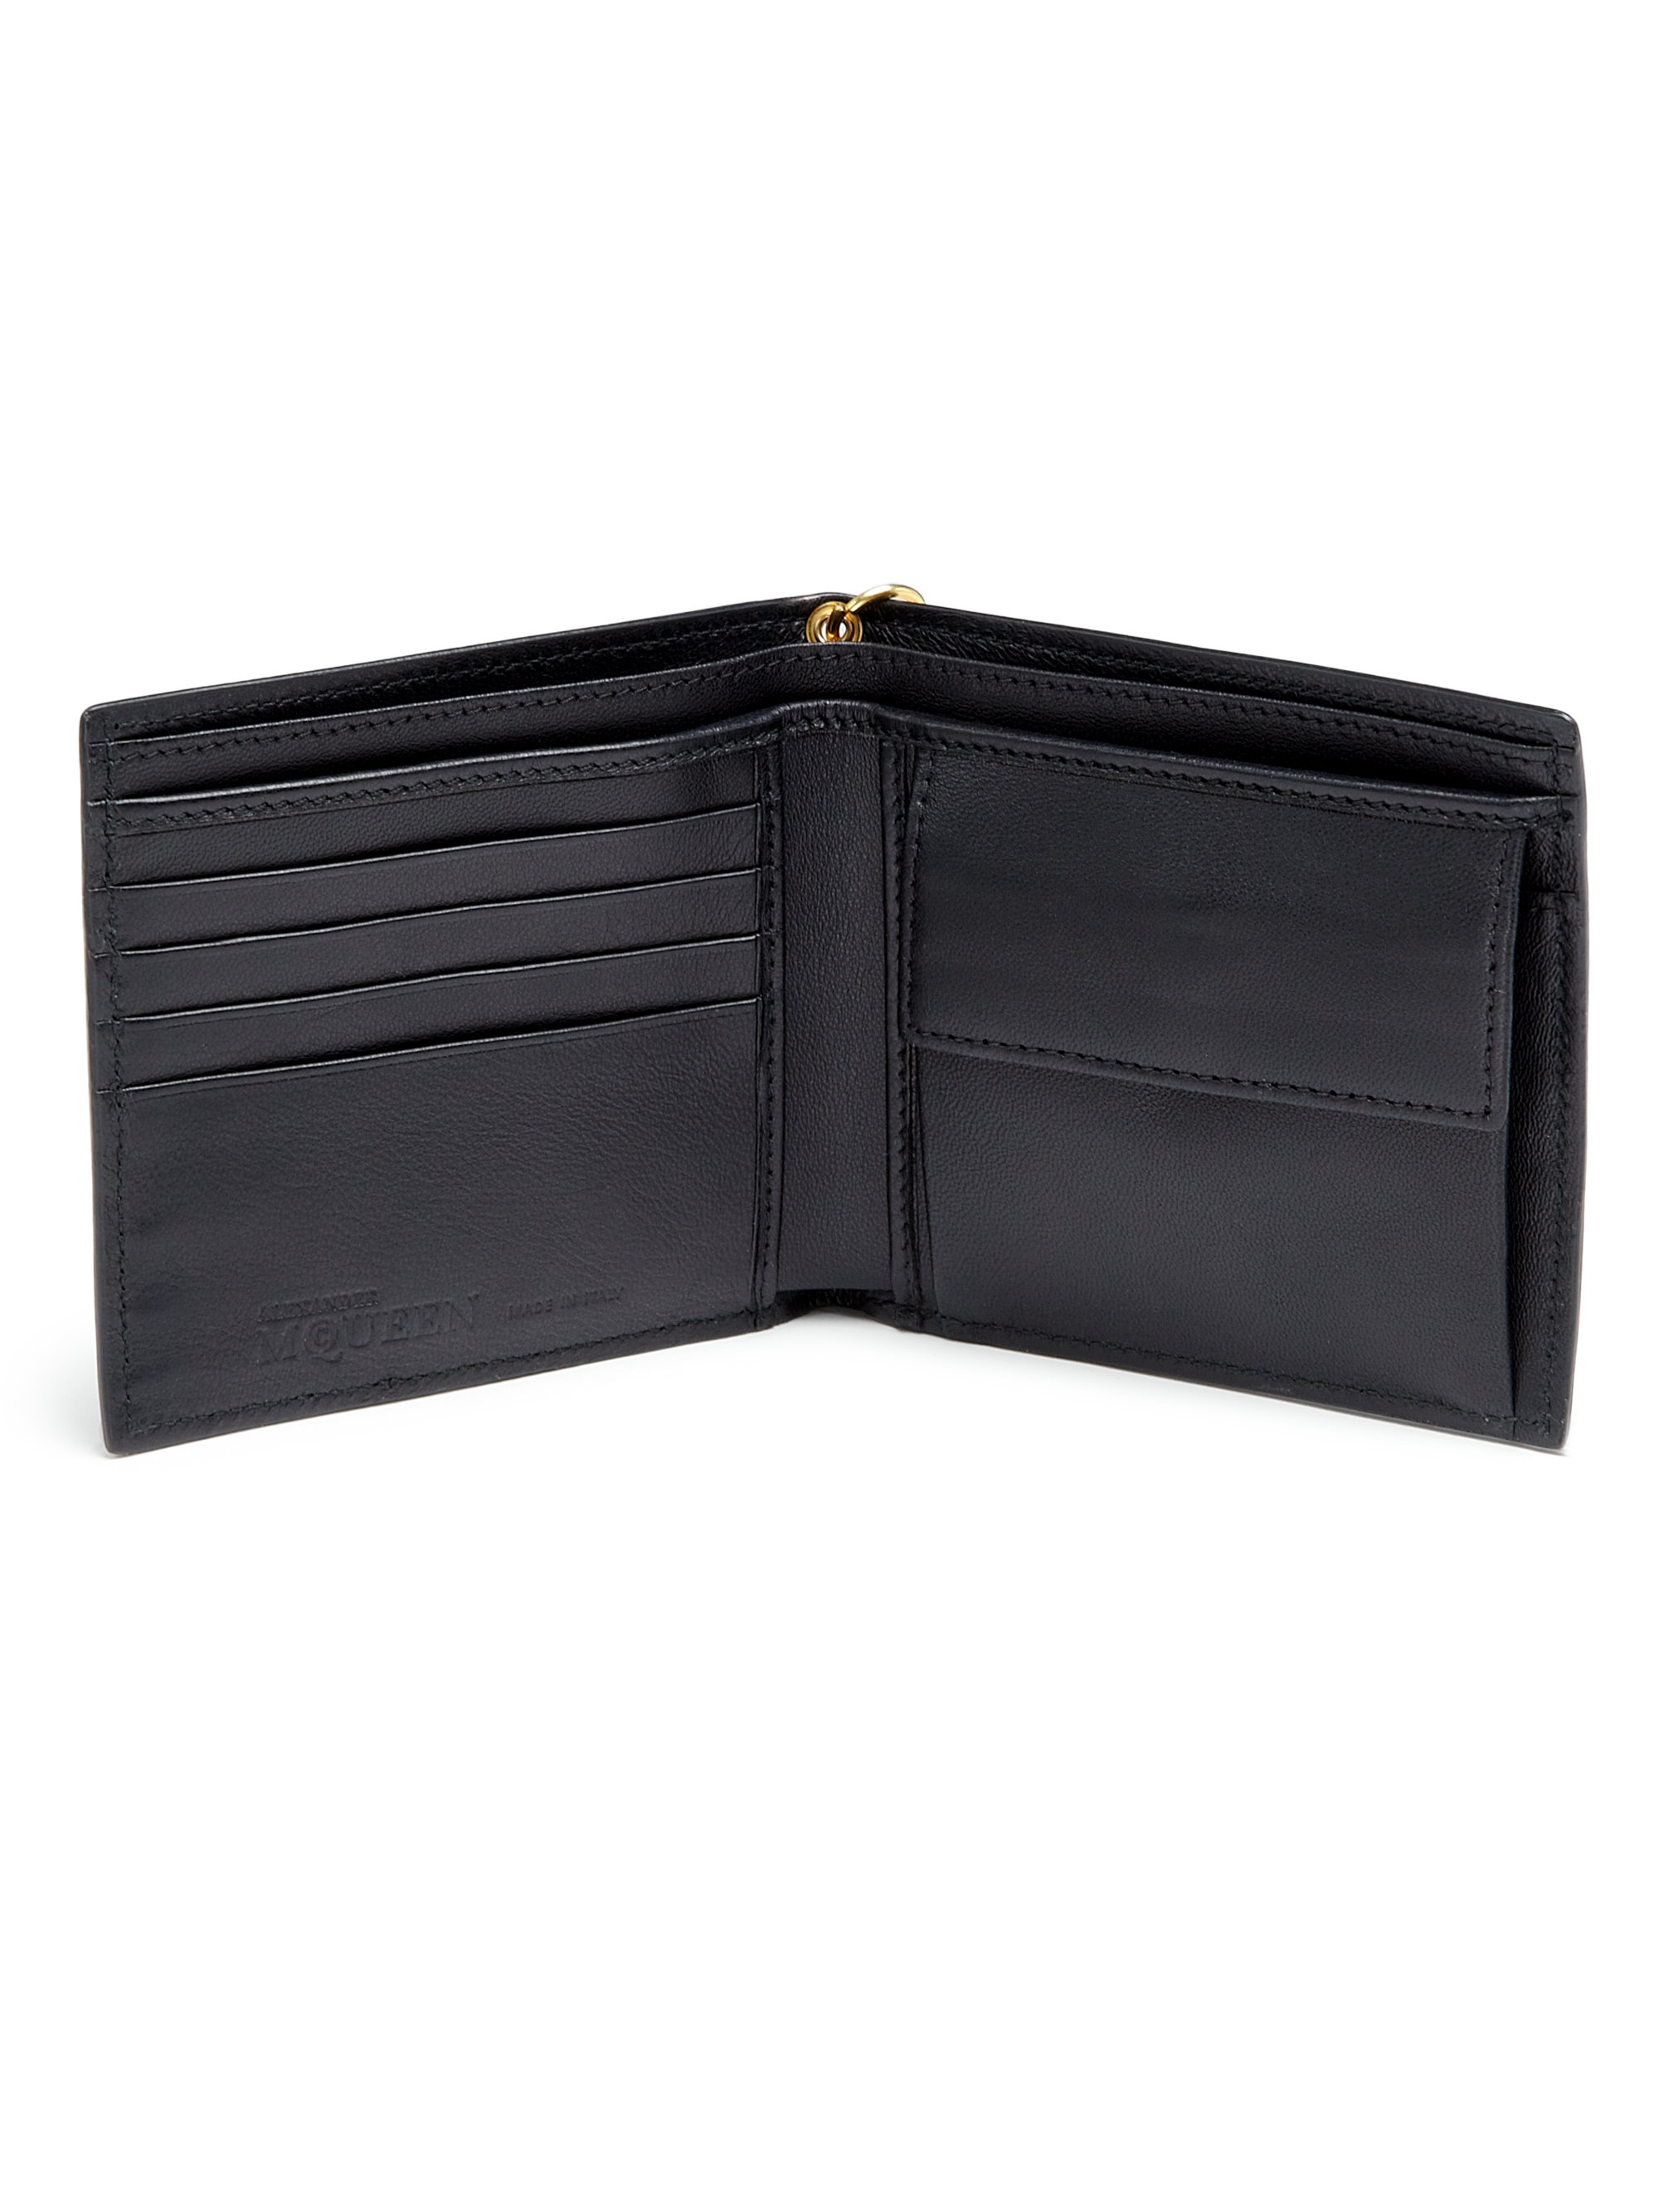 Alexander mcqueen Leather Billfold Wallet in Black for Men | Lyst